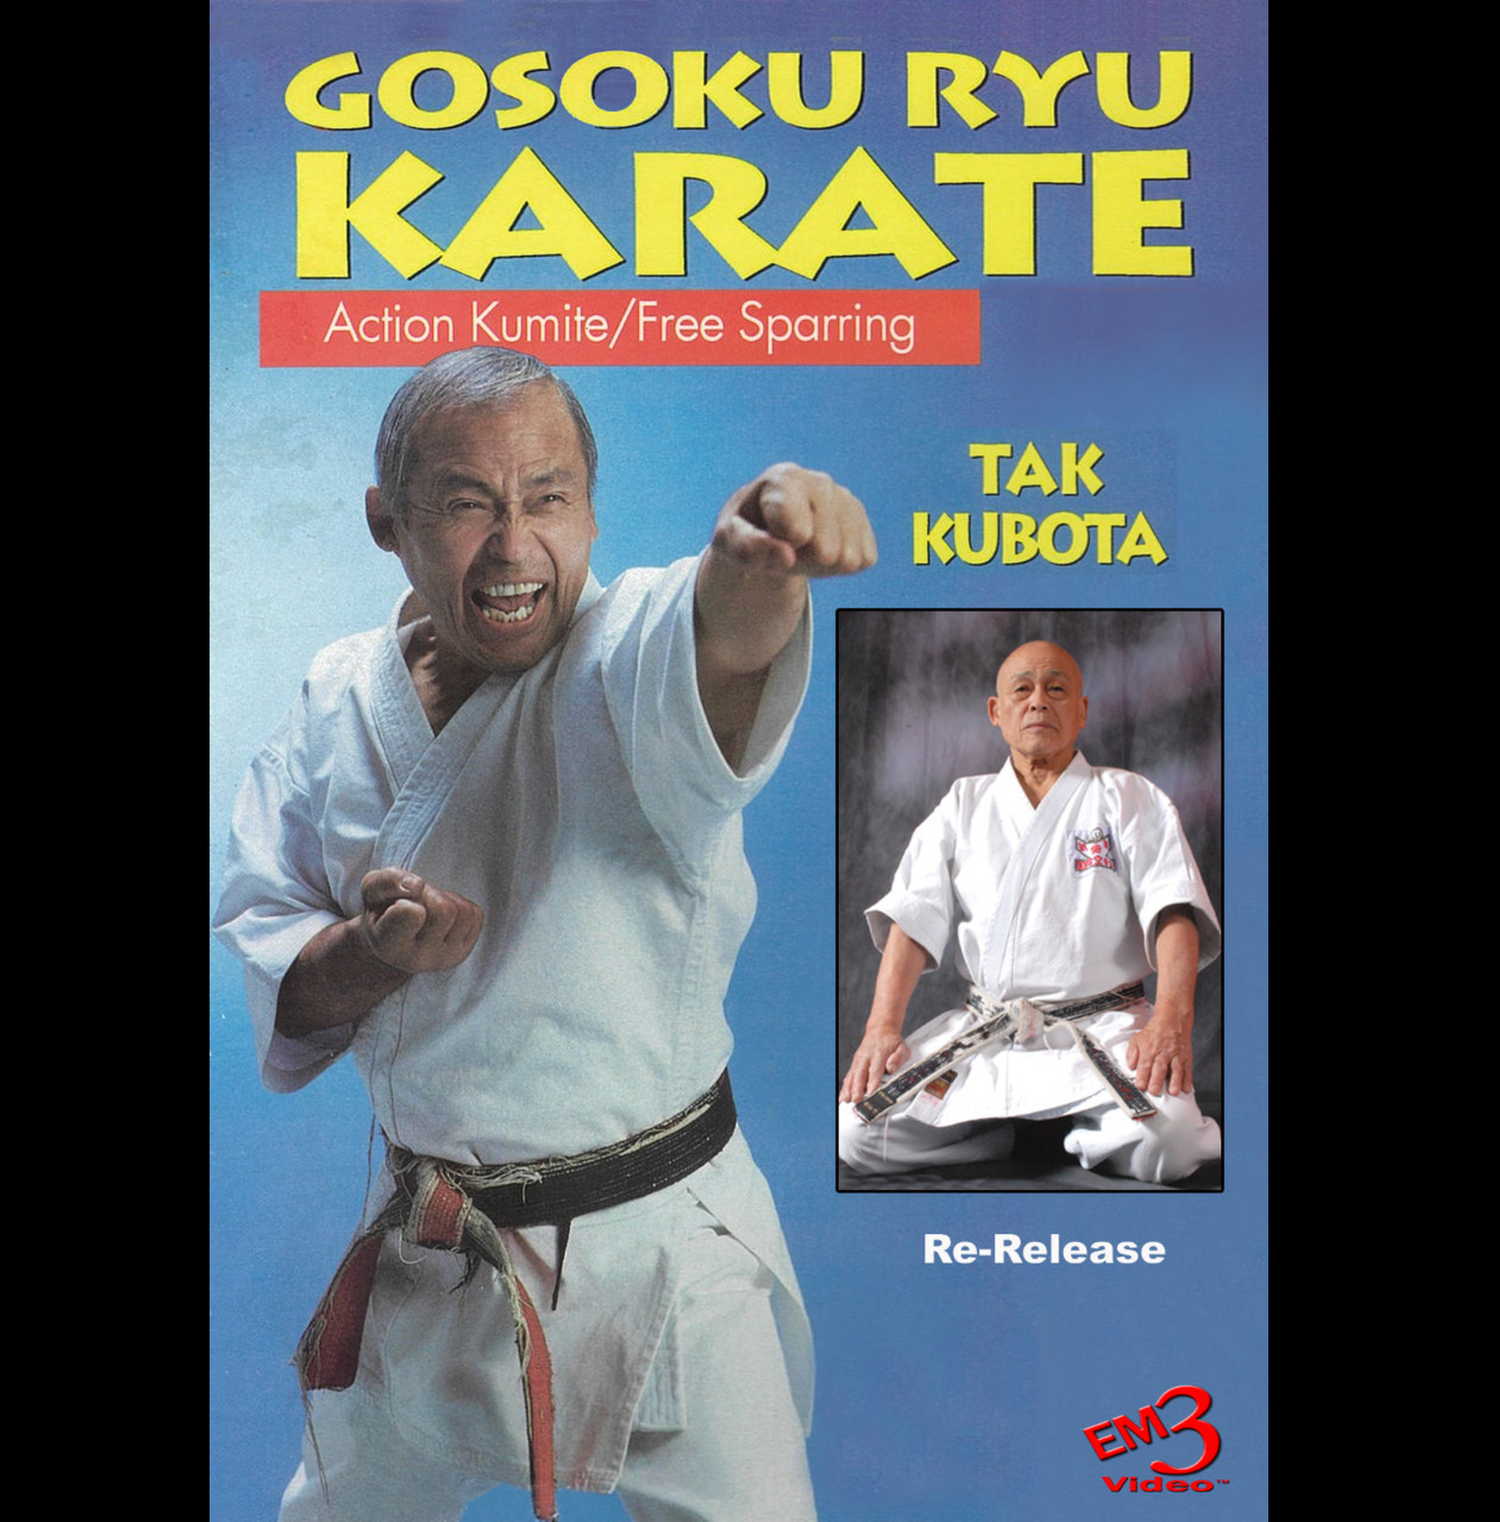 Gosoku Ryu Karate Action Kumite de Tak Kubota (bajo demanda)